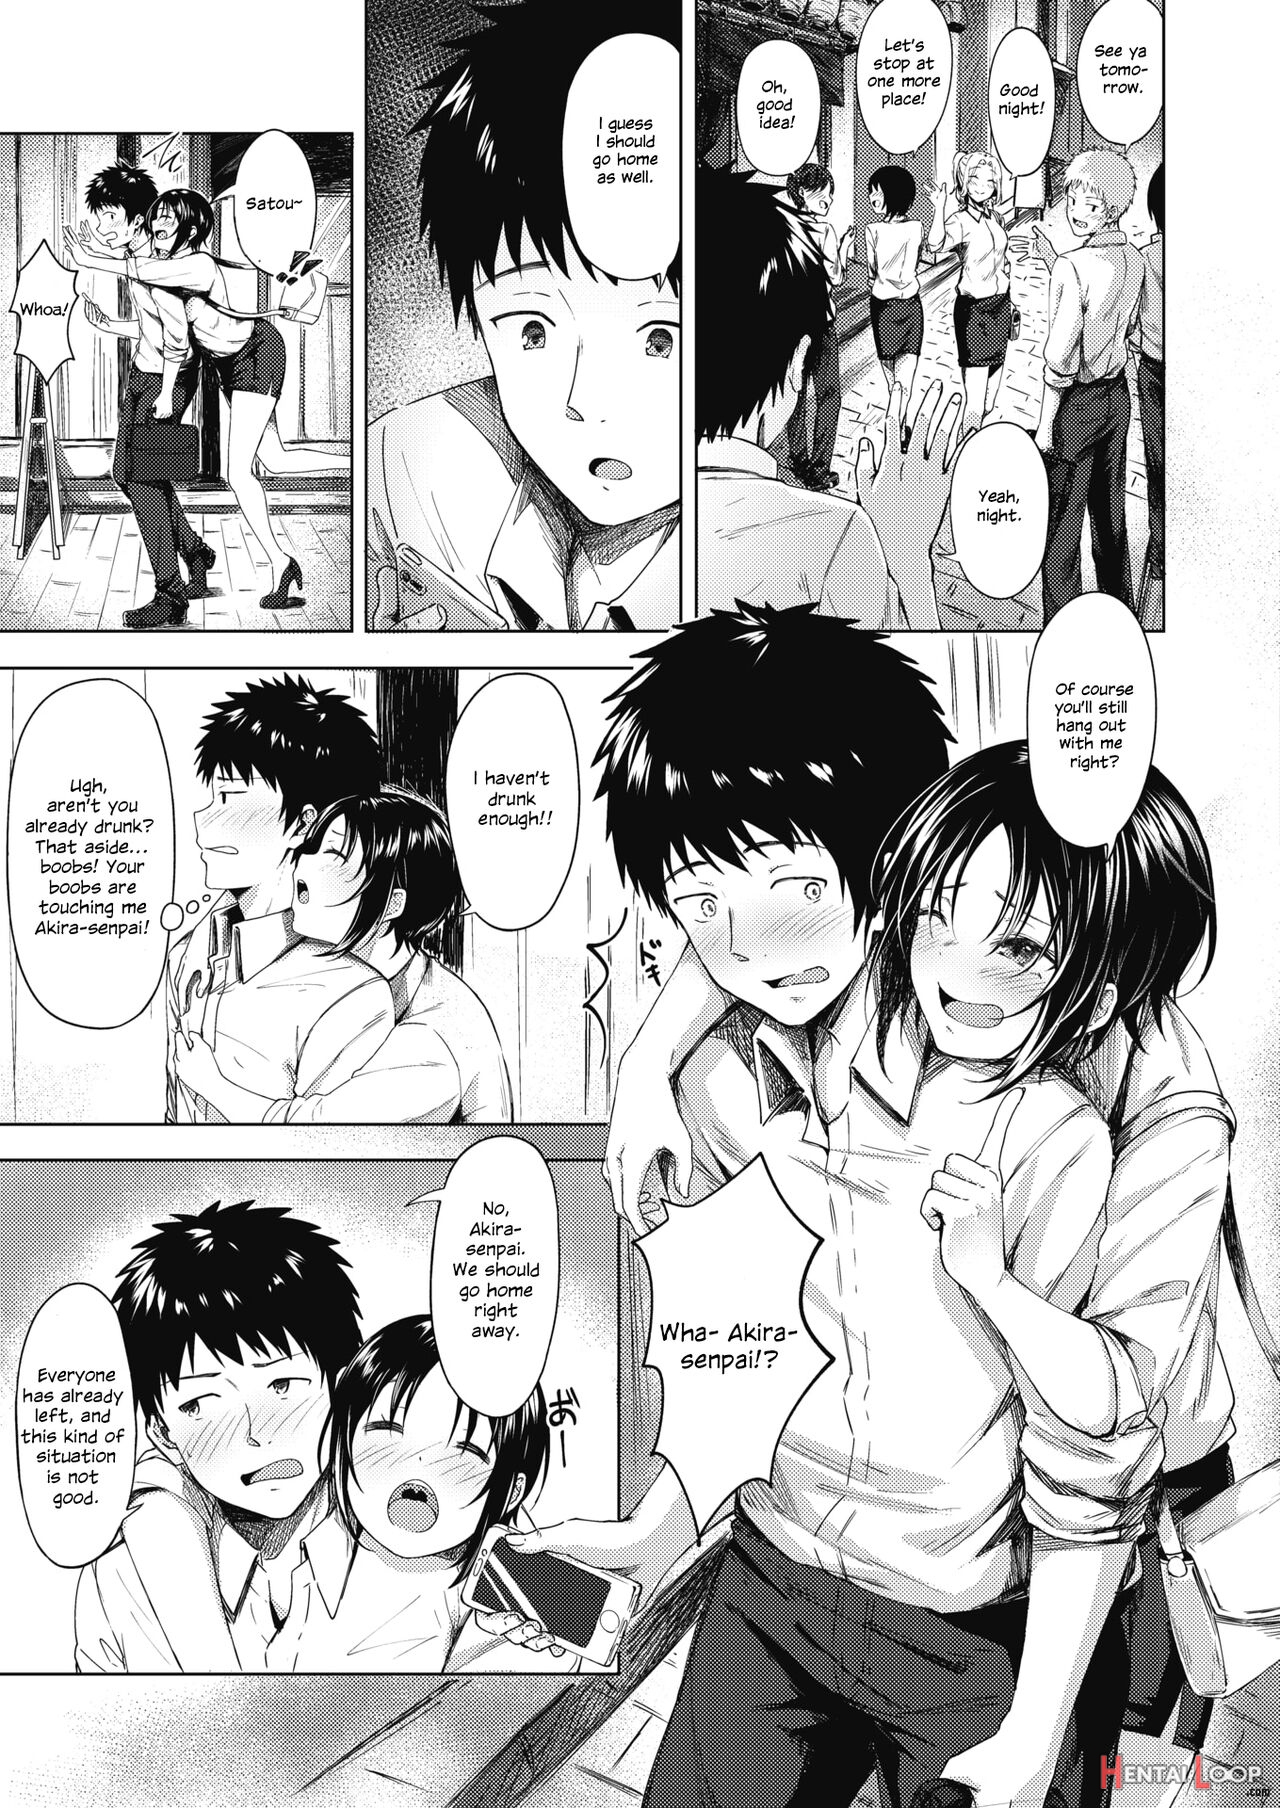 The Senpai I Admire page 3